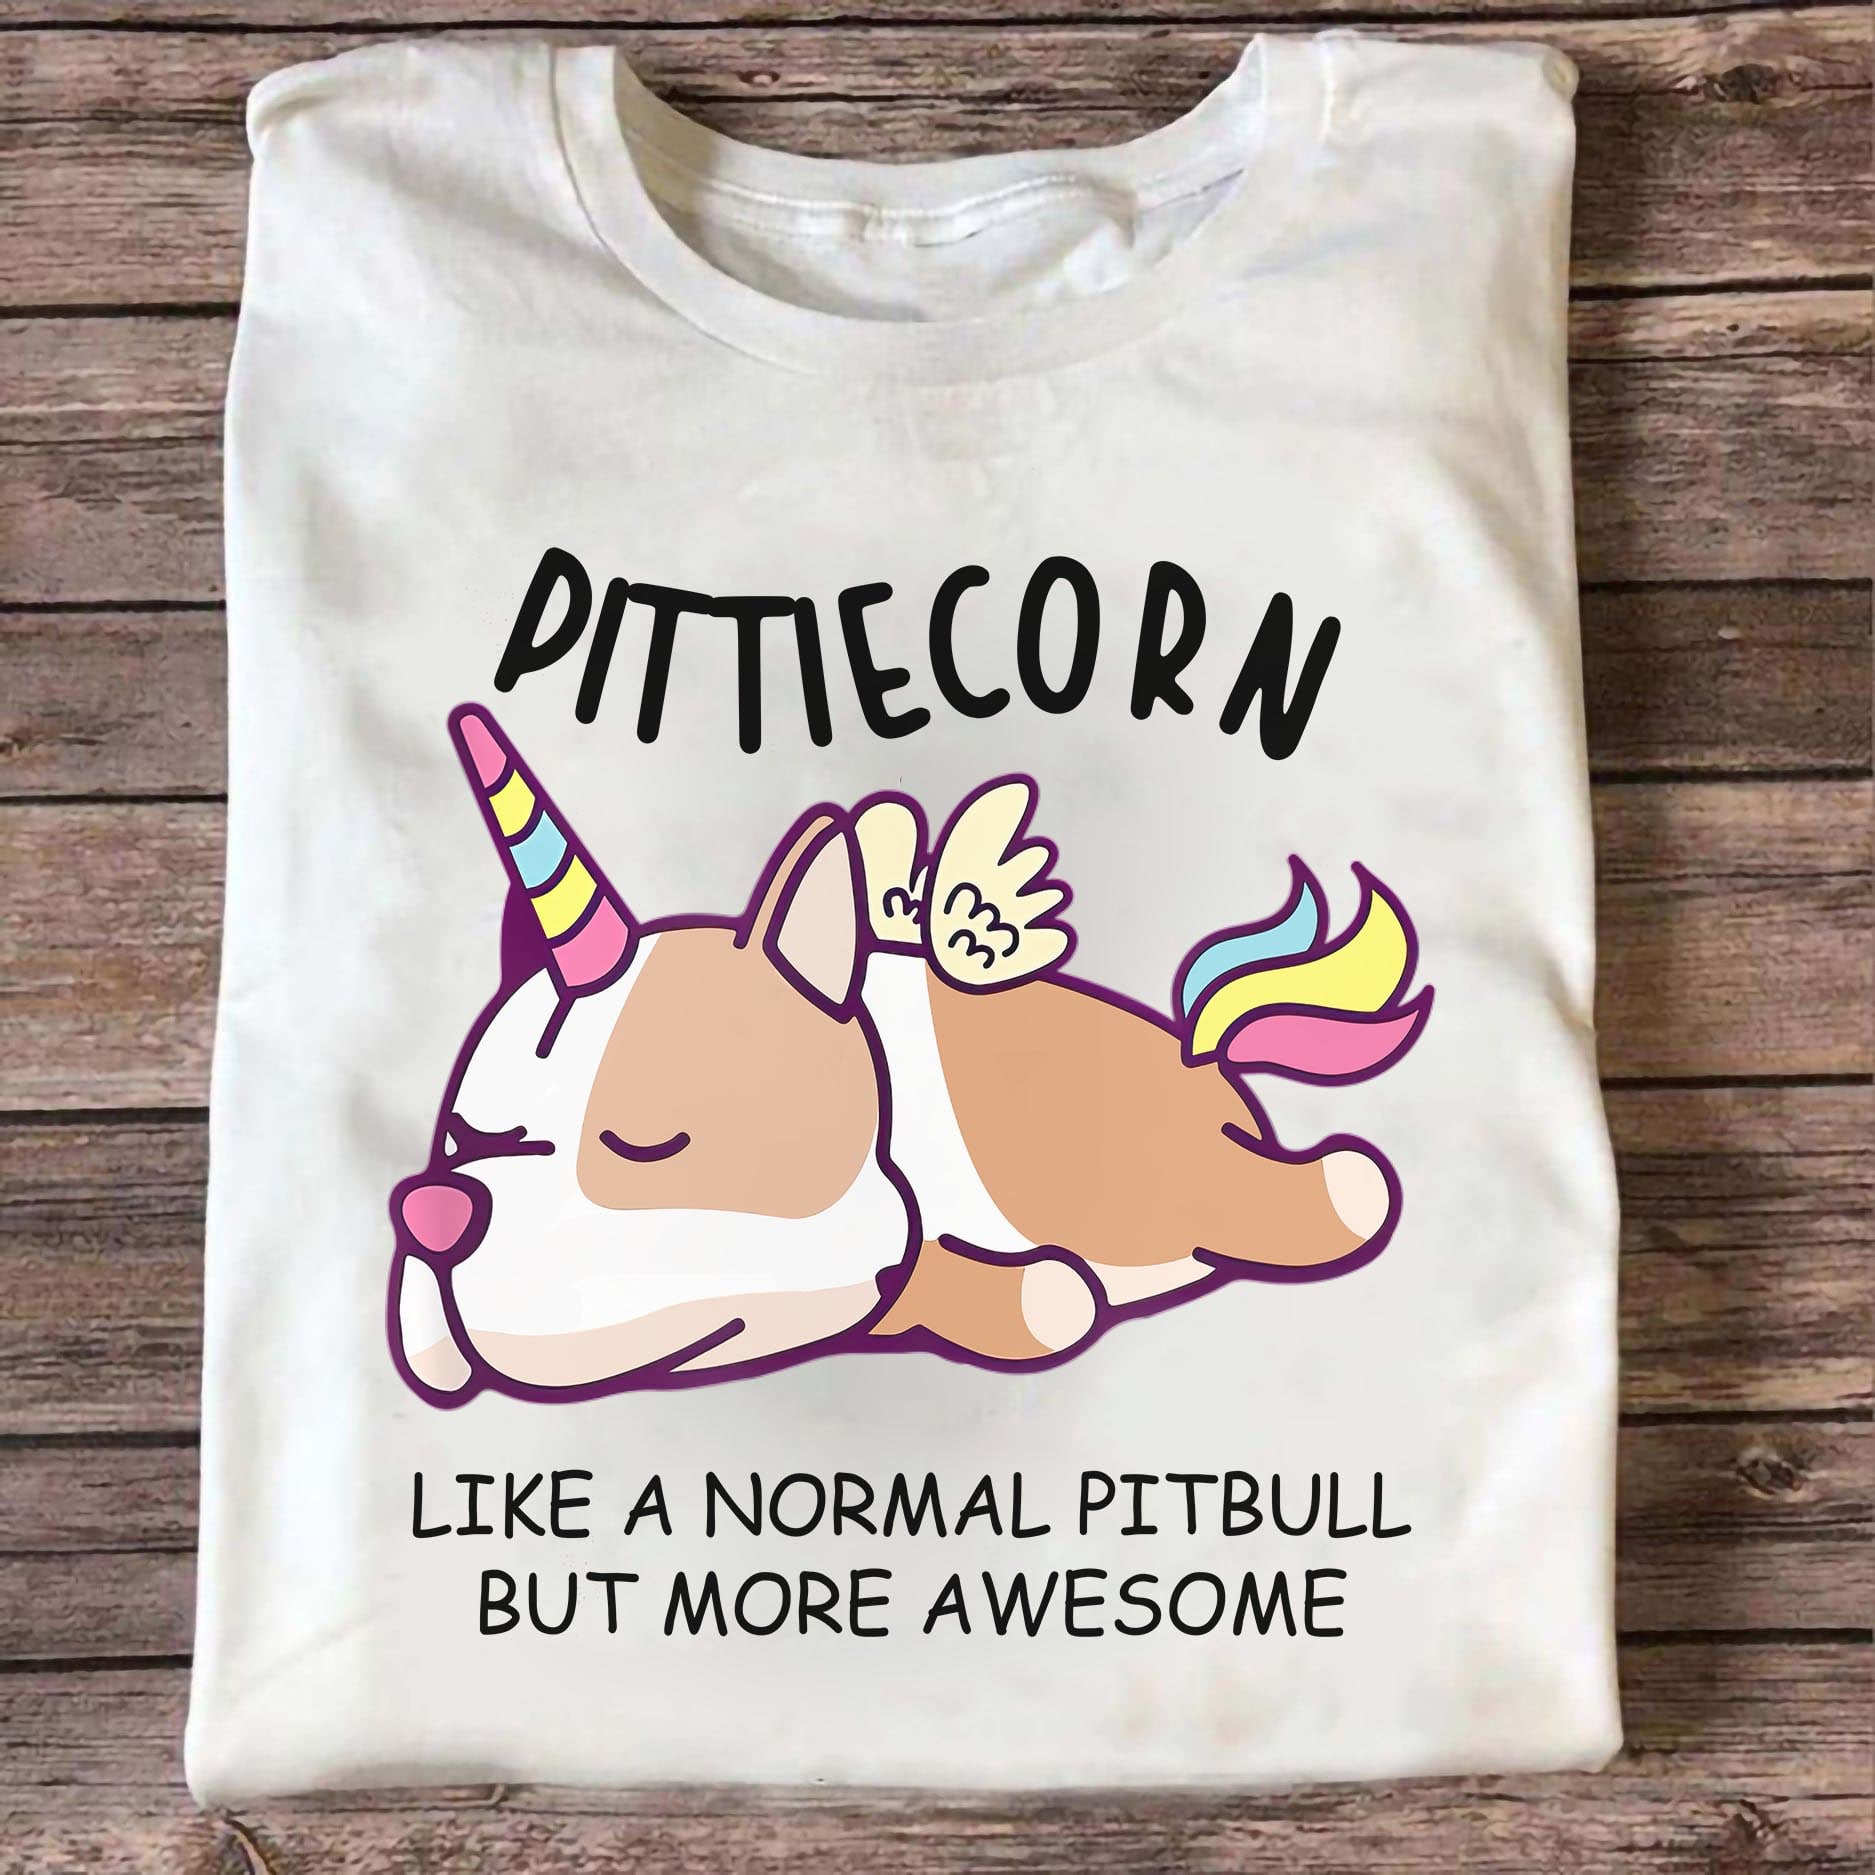 Pittiecorn like a normal pitbull but more awesome - Pittiecorn, dog lover